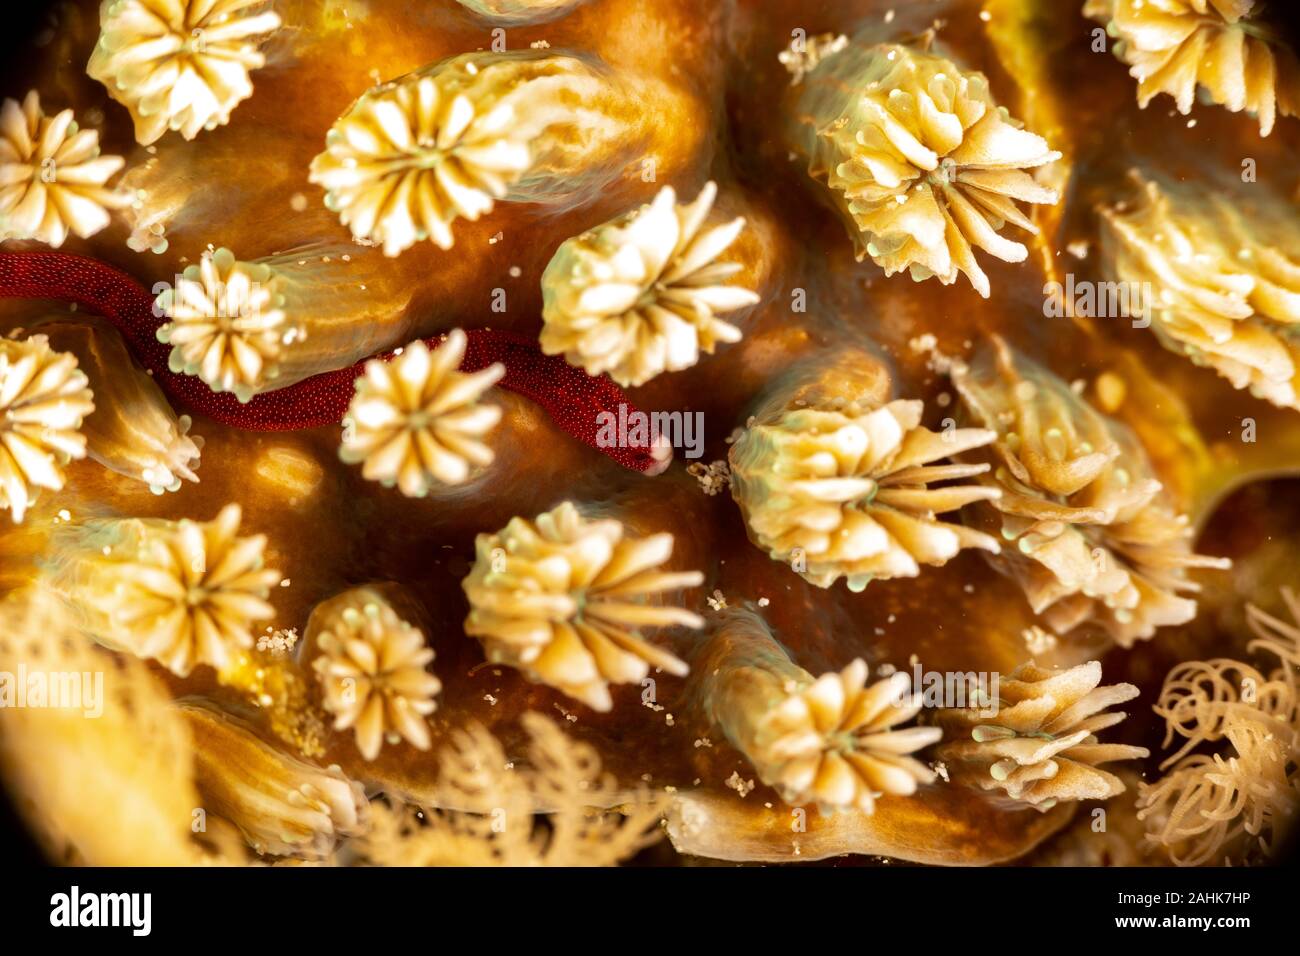 Braun's pughead pipefish in his coral, Bulbonaricus brauni is a species ...